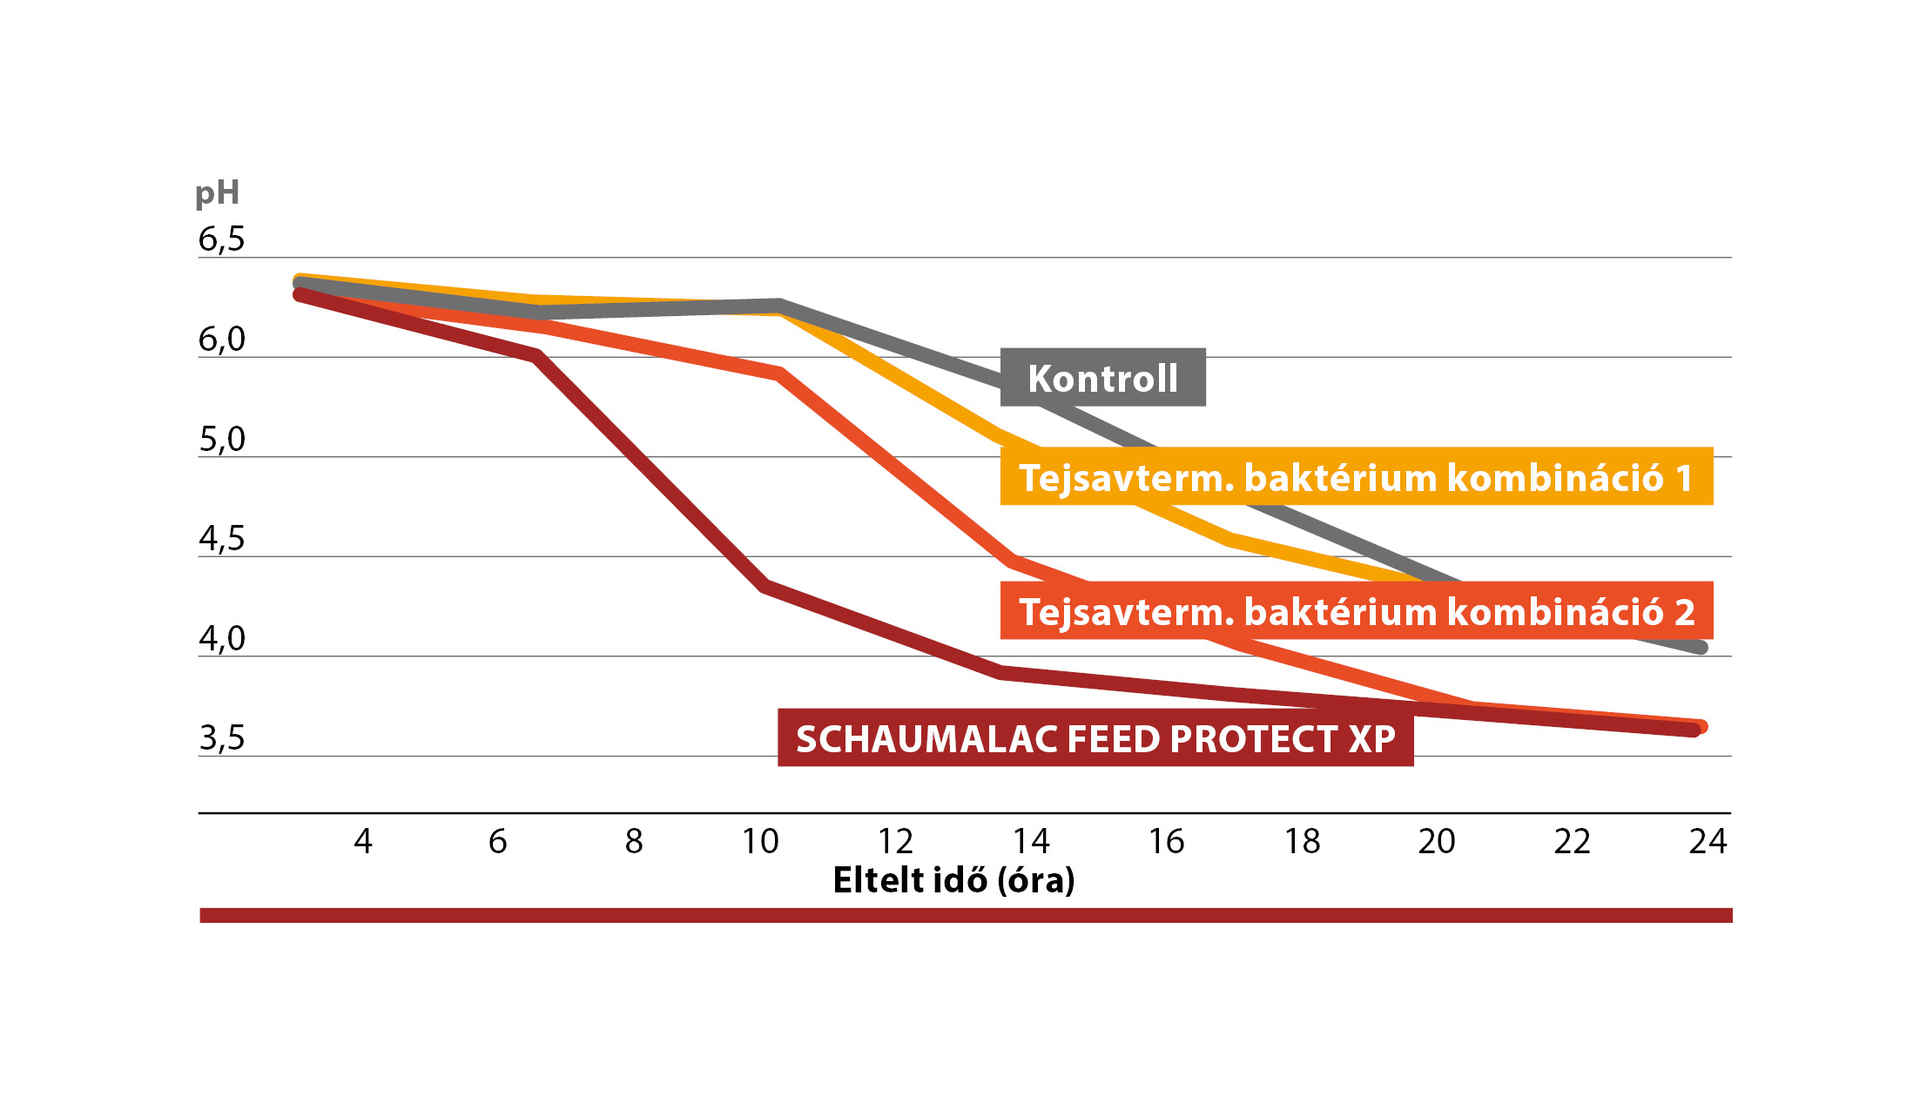 SCHAUMALAC FEED PROTECT XP